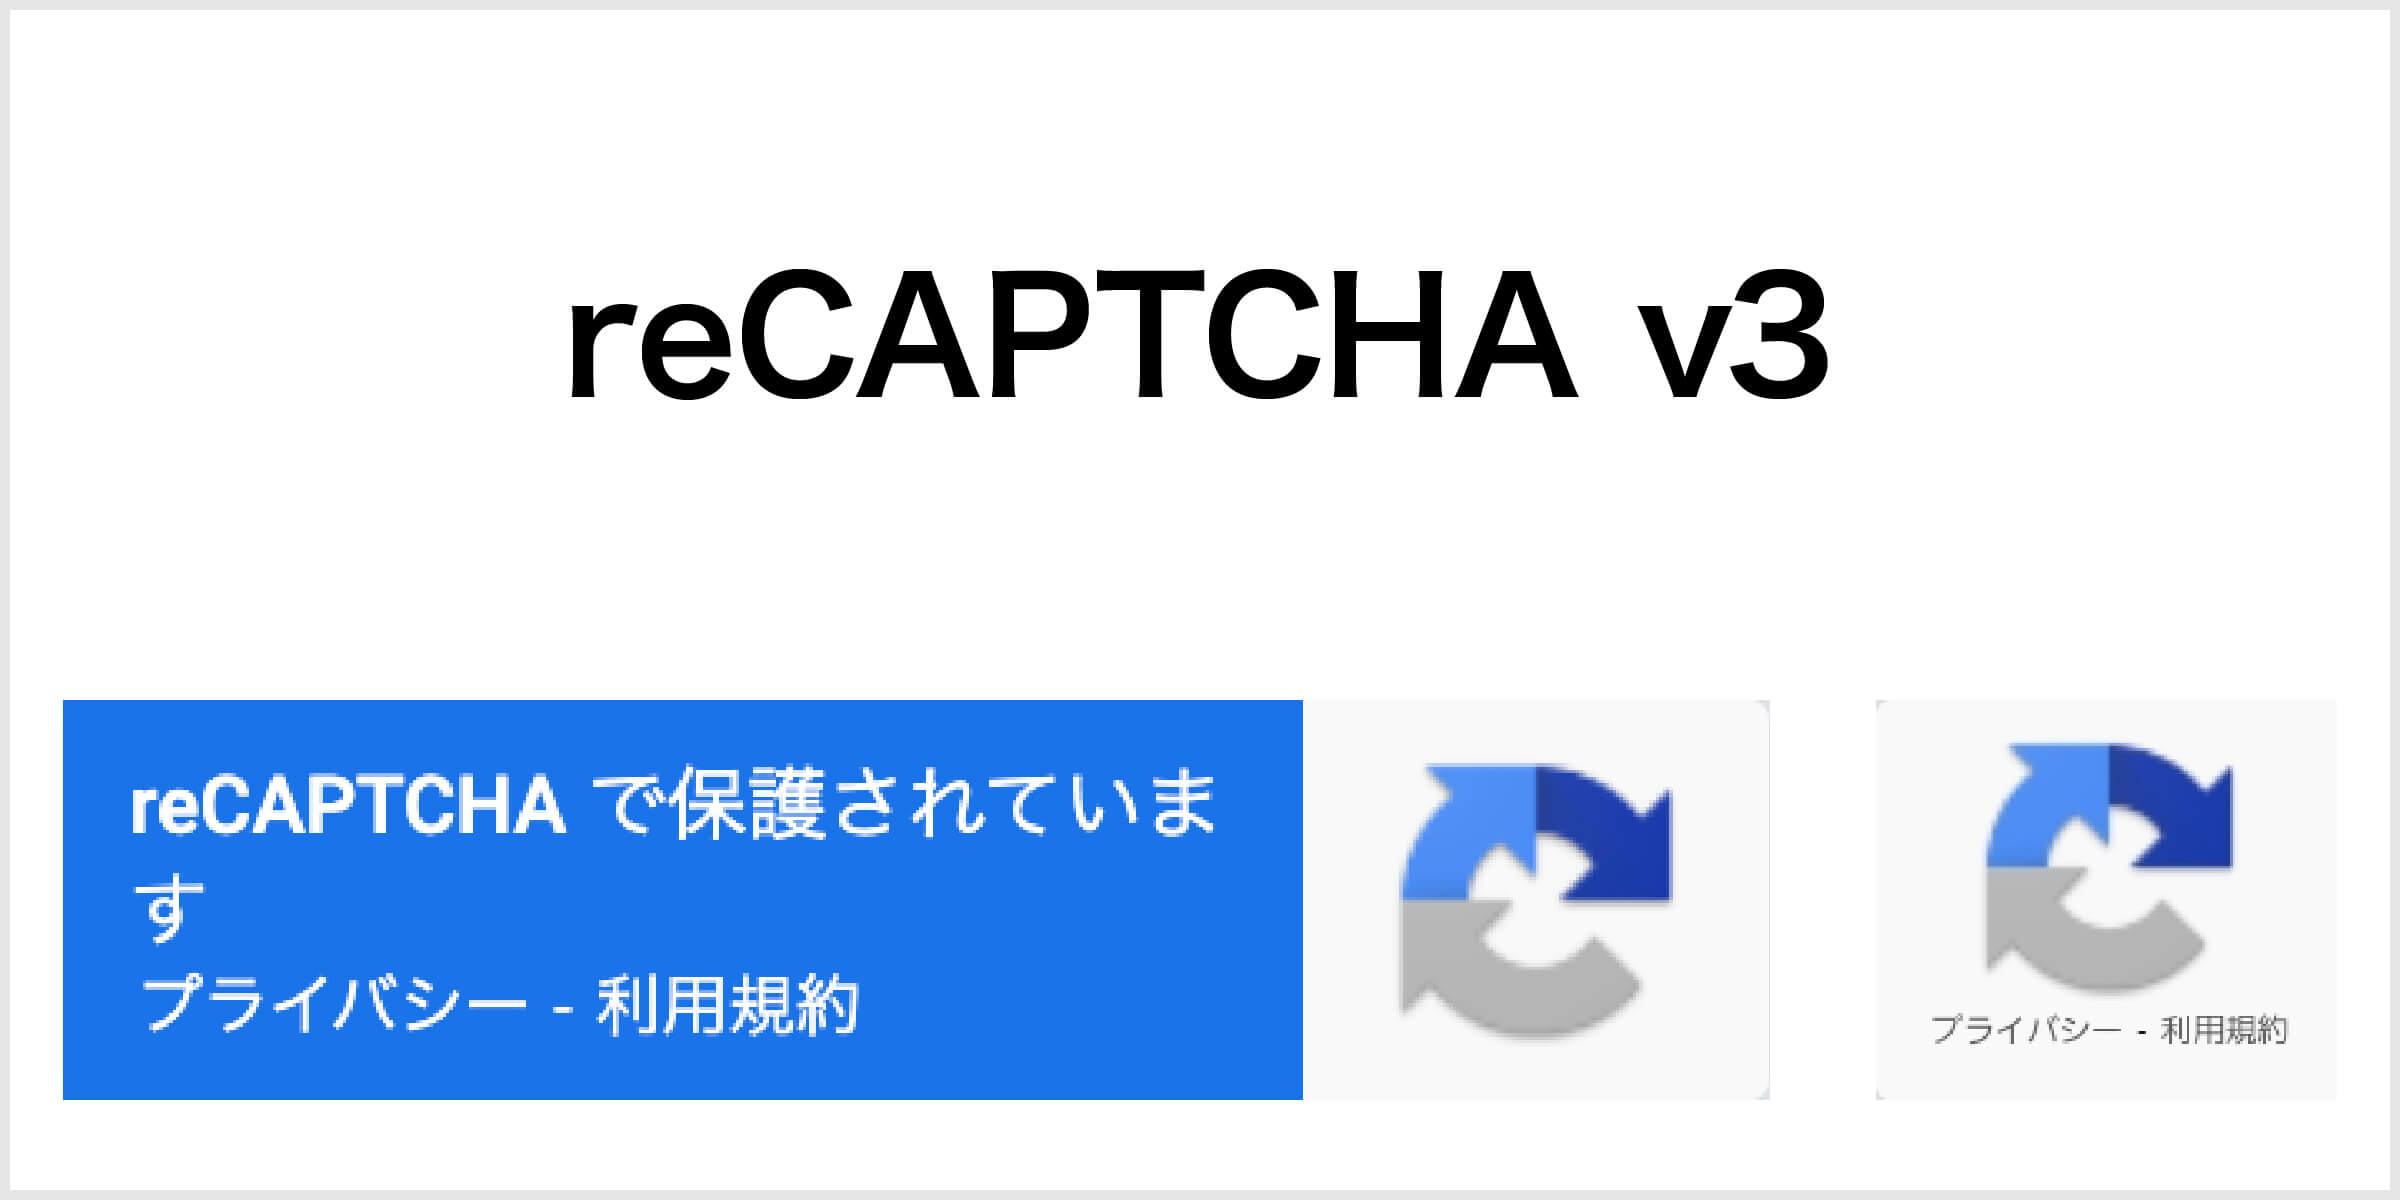 reCAPTCHA v3